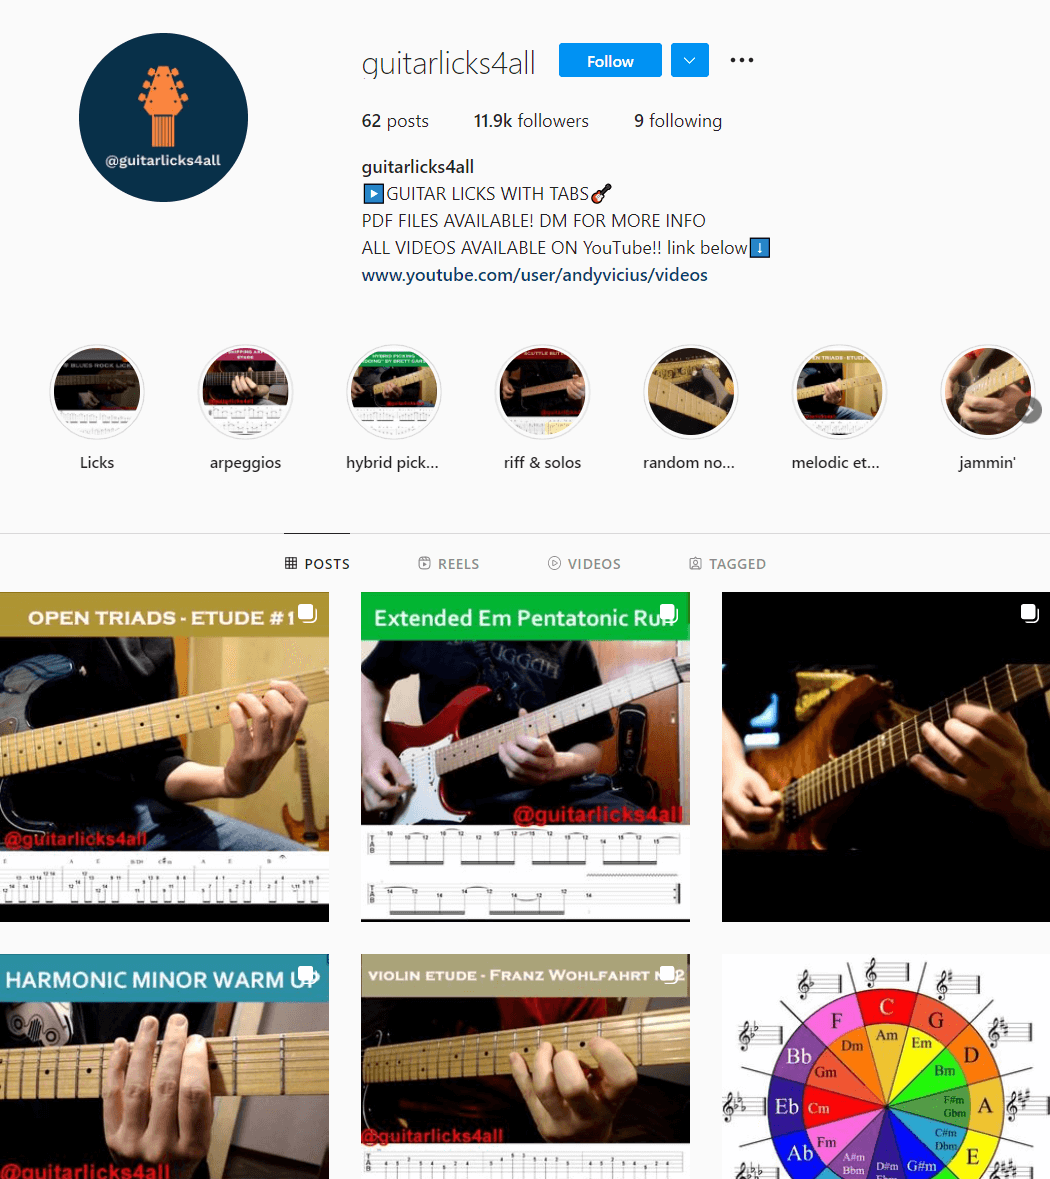 guitarlicks4all guitar Instagram account